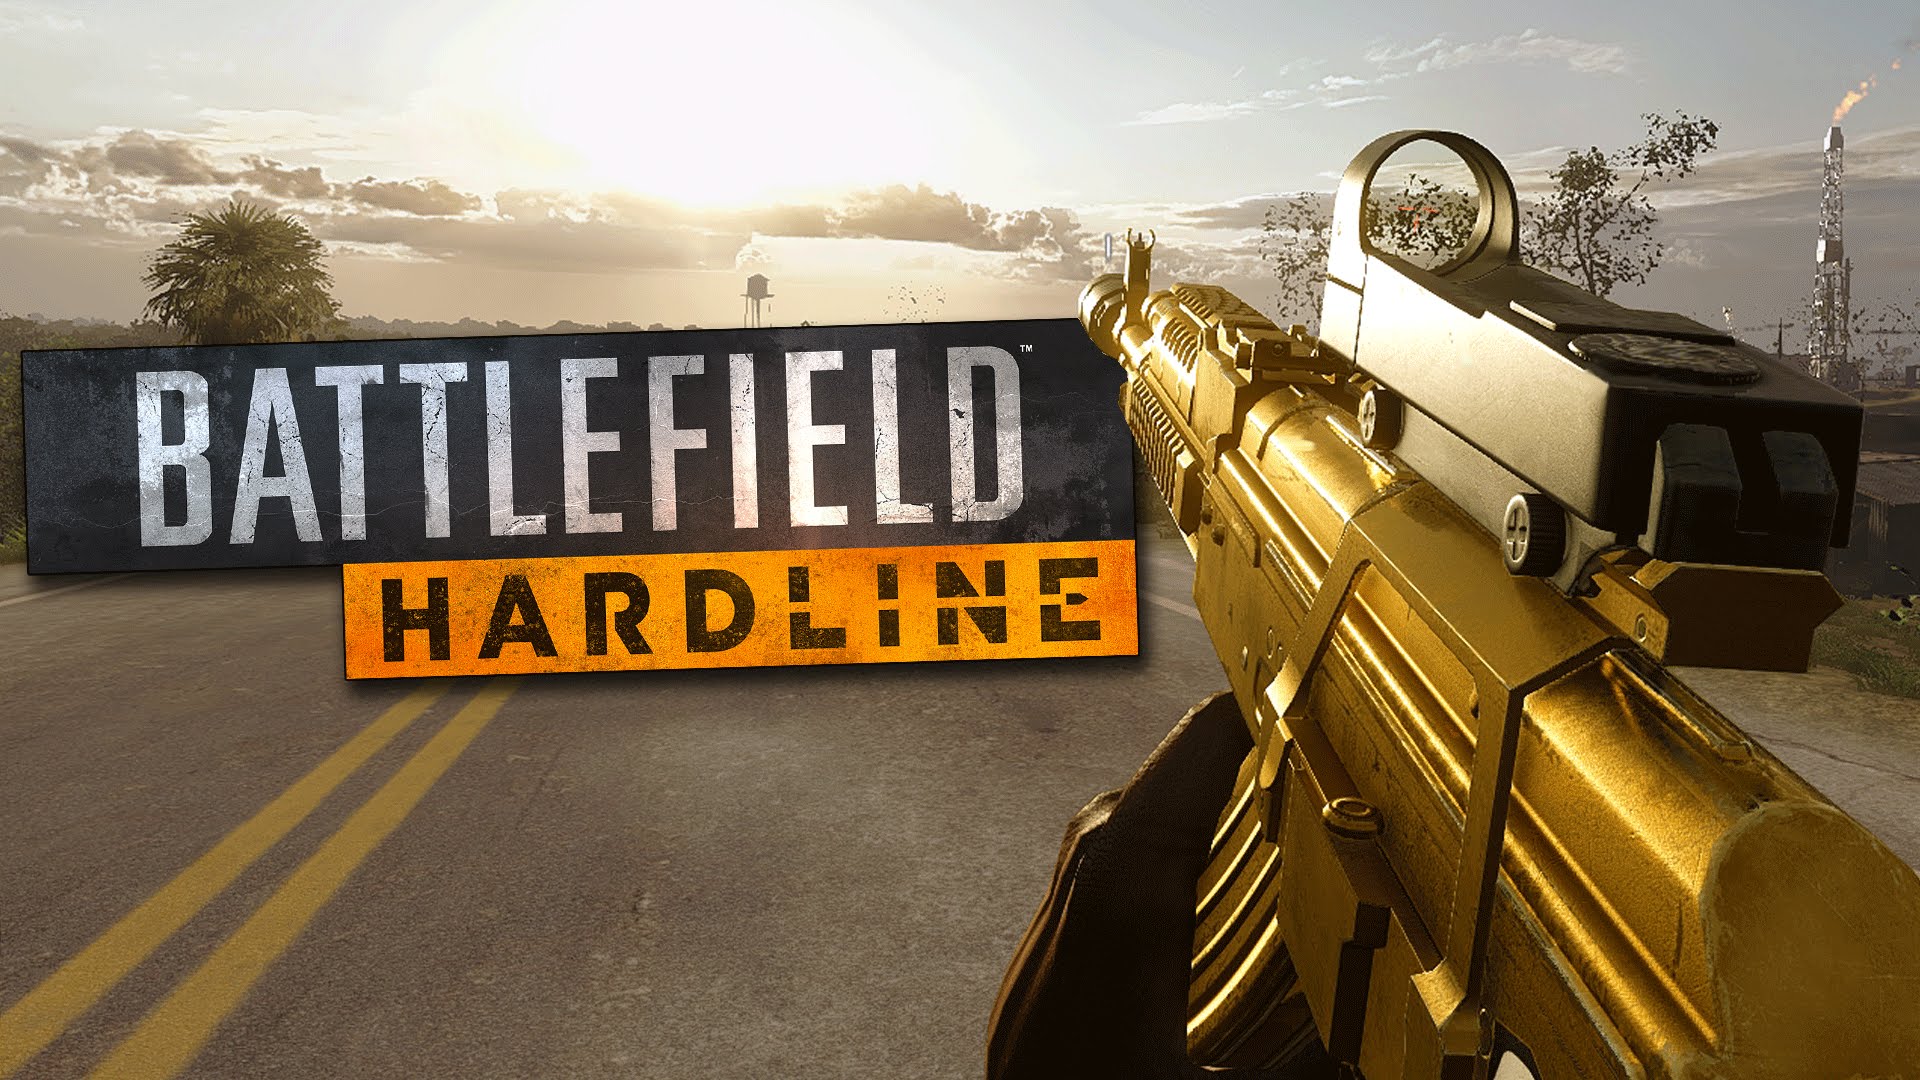 BATTLEFIELD HARDLINE Gameplay - GOLD GUNS, ALL WEAPONS, VEHICLES ...